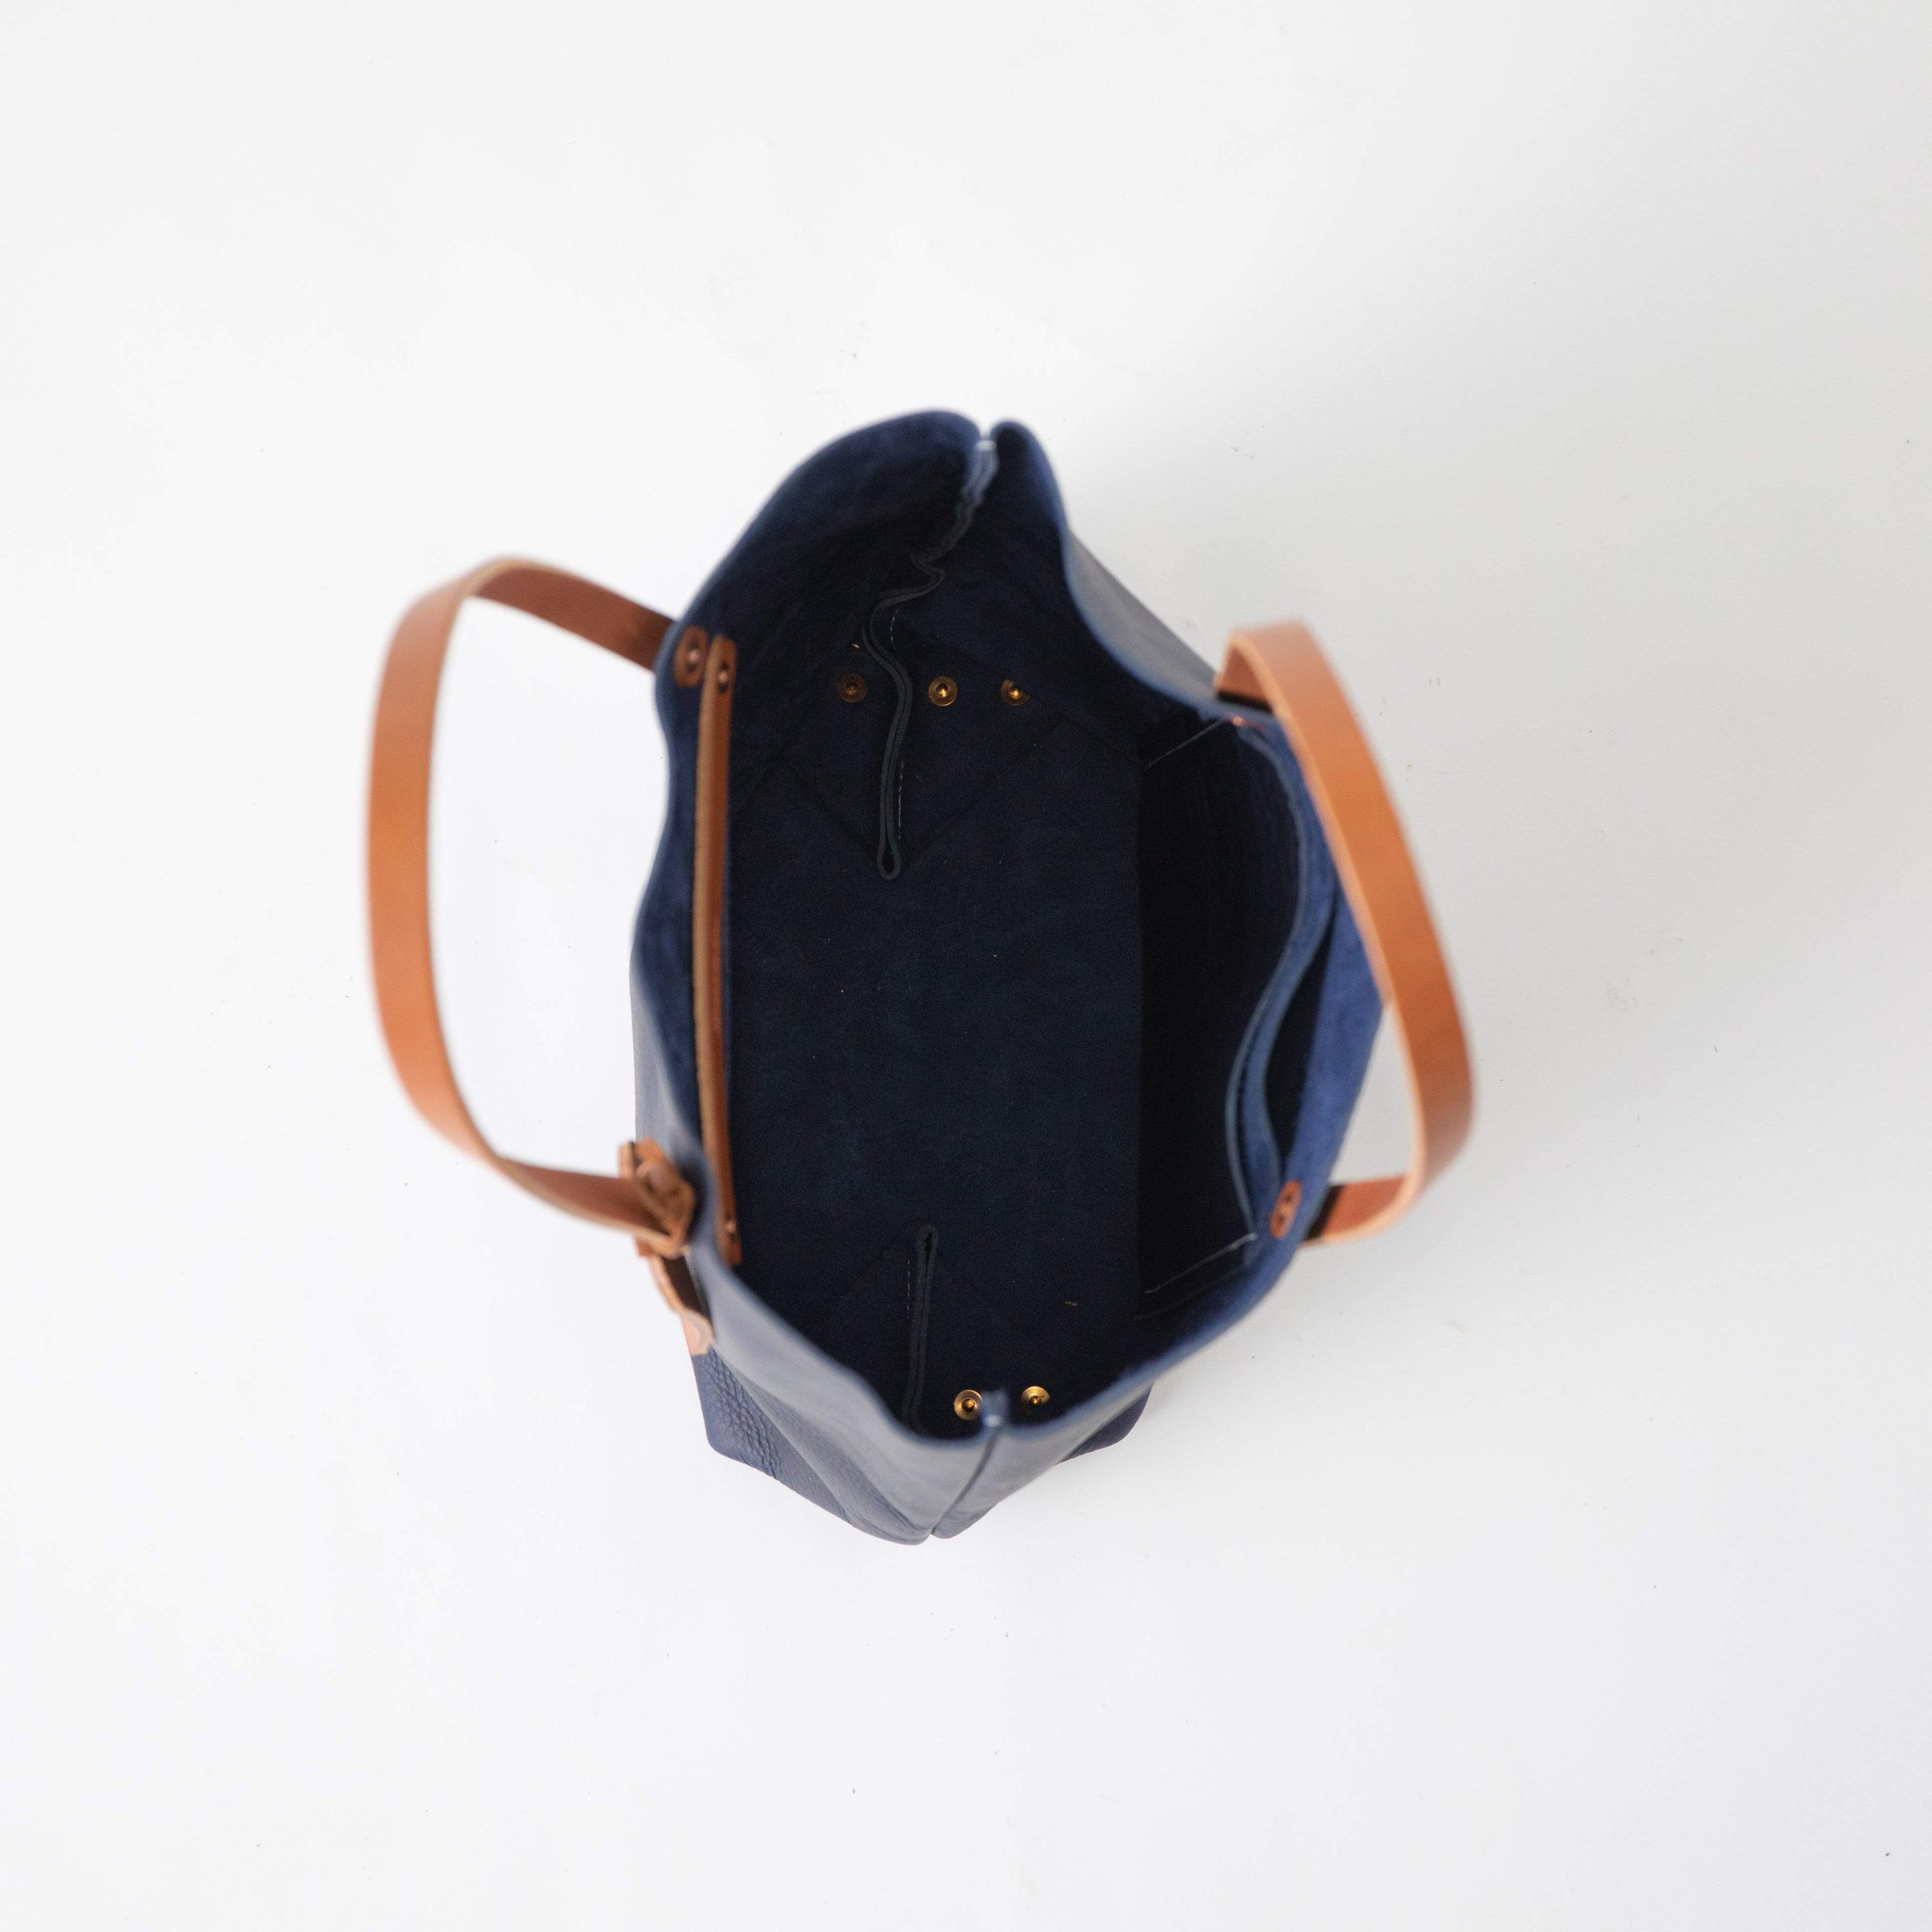 Leather Tote Bags: Tan Kodiak Tote | Leather Handbags by KMM & Co. 10-Inch +$25 / D-Rings (FINAL SALE) +$25